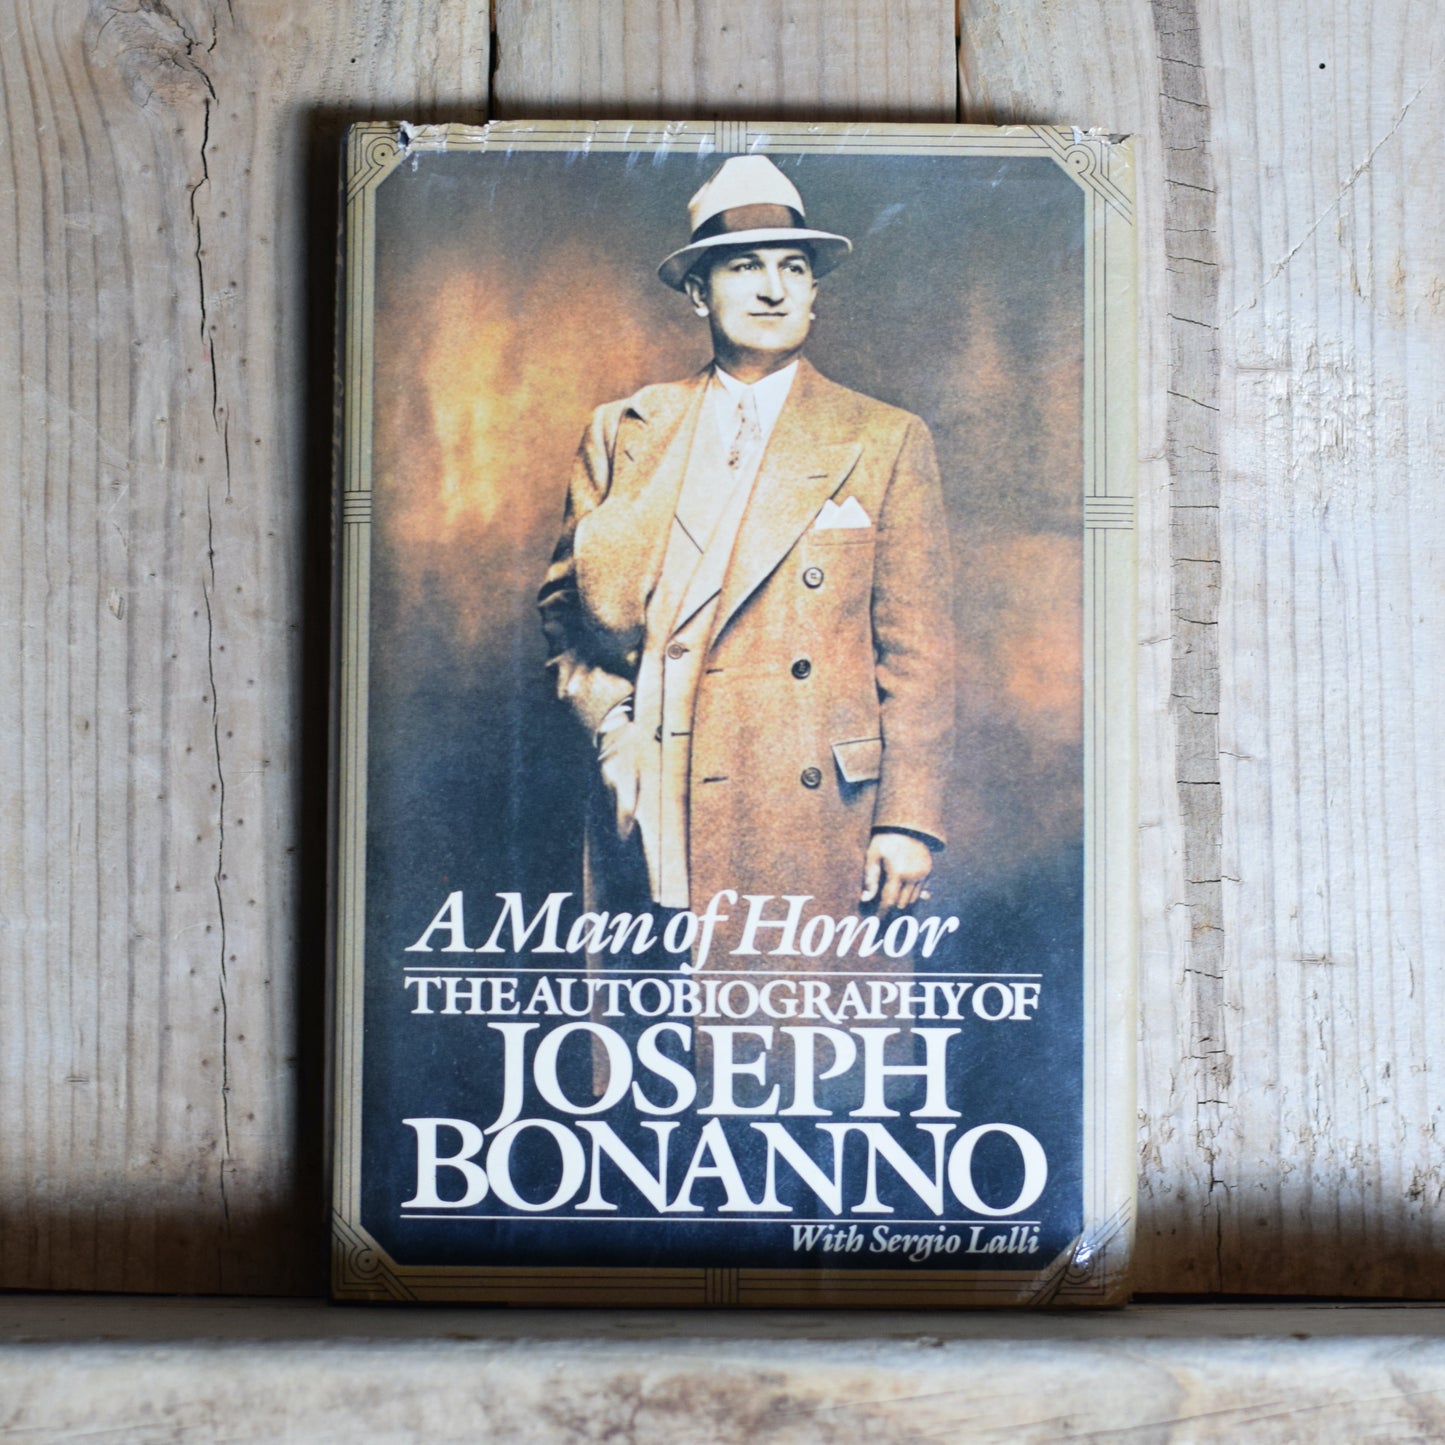 Vintage Autobiography Hardback: Joseph Bonanno and Sergio Lalli - A Man of Honor SIGNED FIRST PRINTING